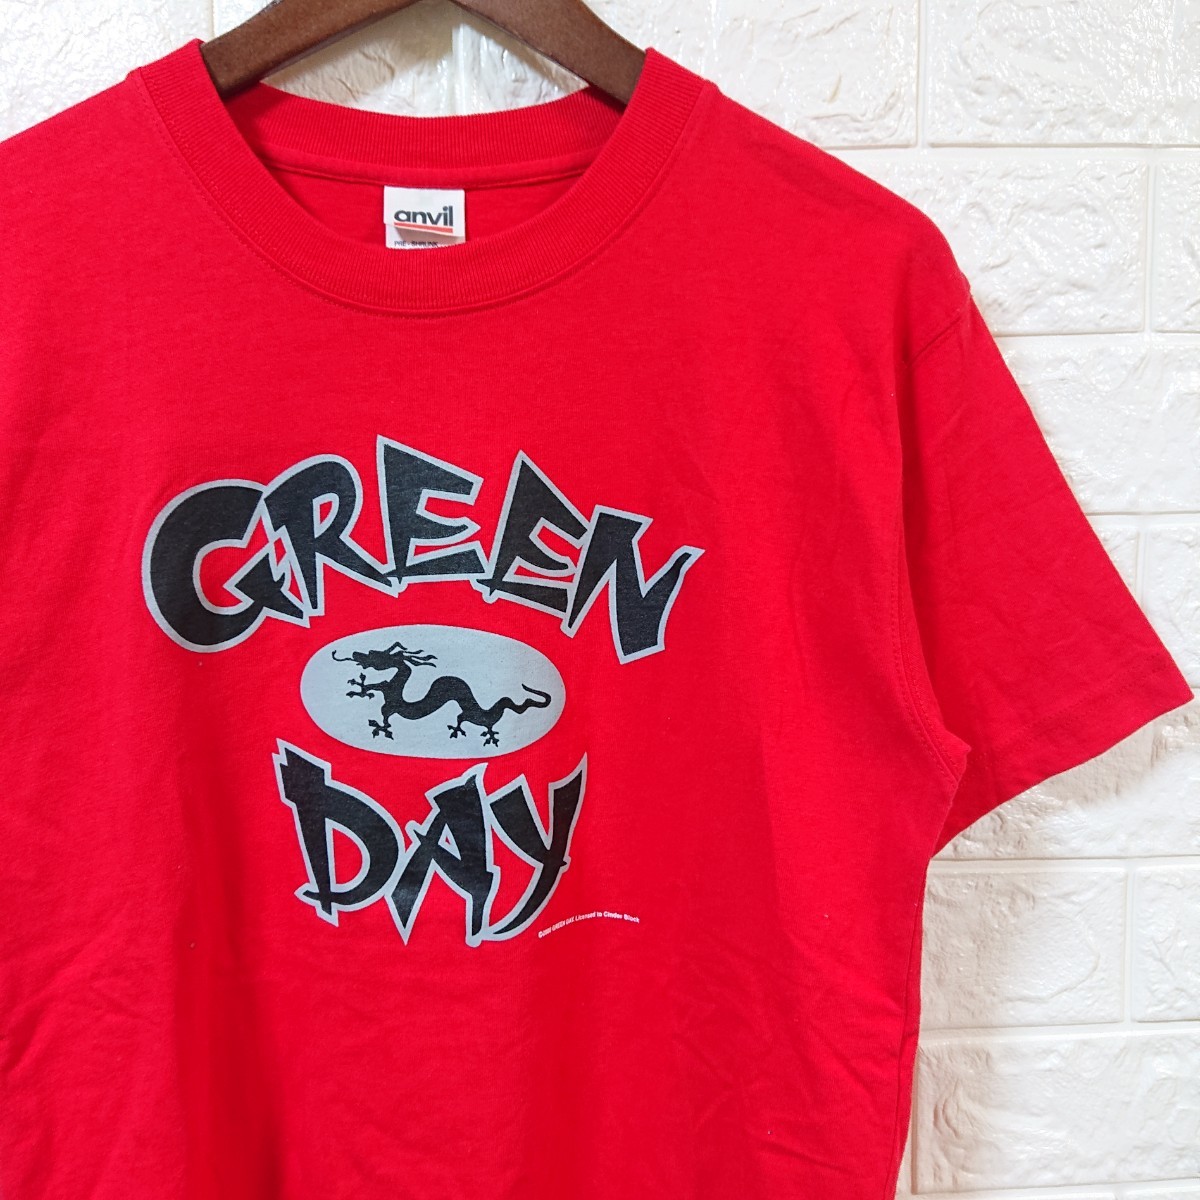 【00s】GREEN DAY グリーンデイ 2000年 ドラゴンプリント パンク ロック バンドTシャツ Sサイズ 赤 anvil製 punk rock band t-shirt tee_画像1